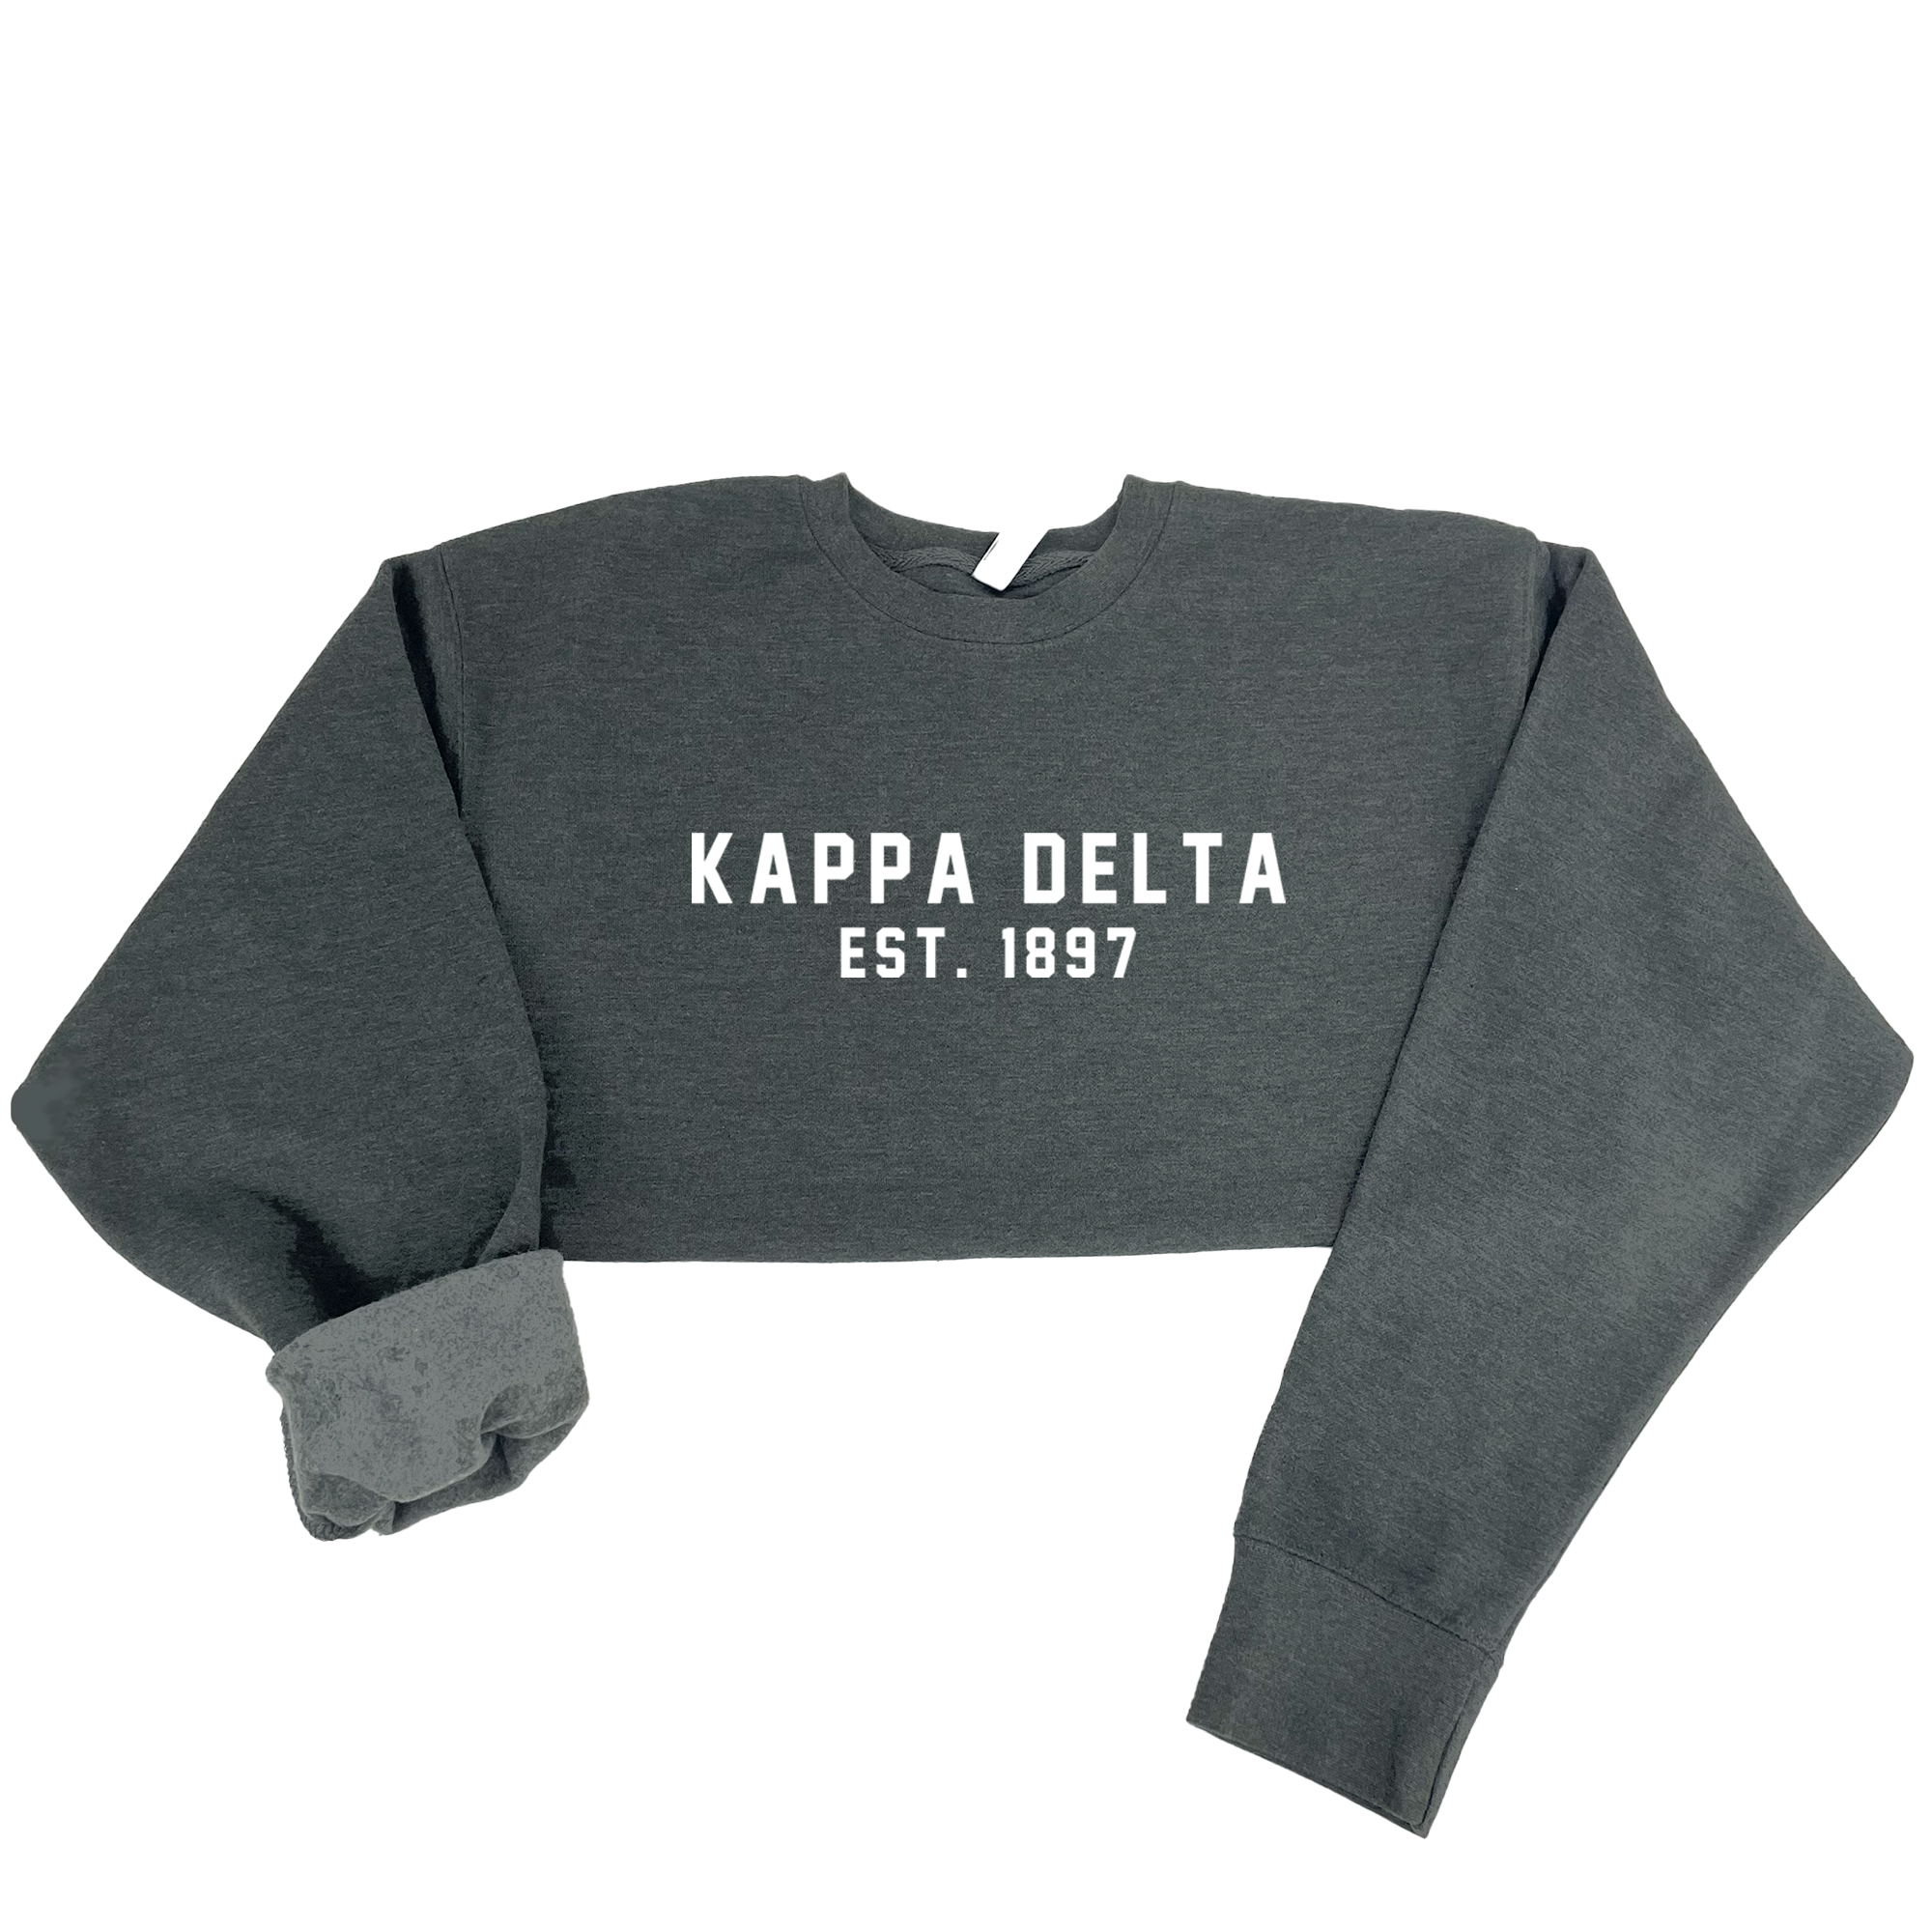 Kappa Delta Est. 1897 Sweatshirt